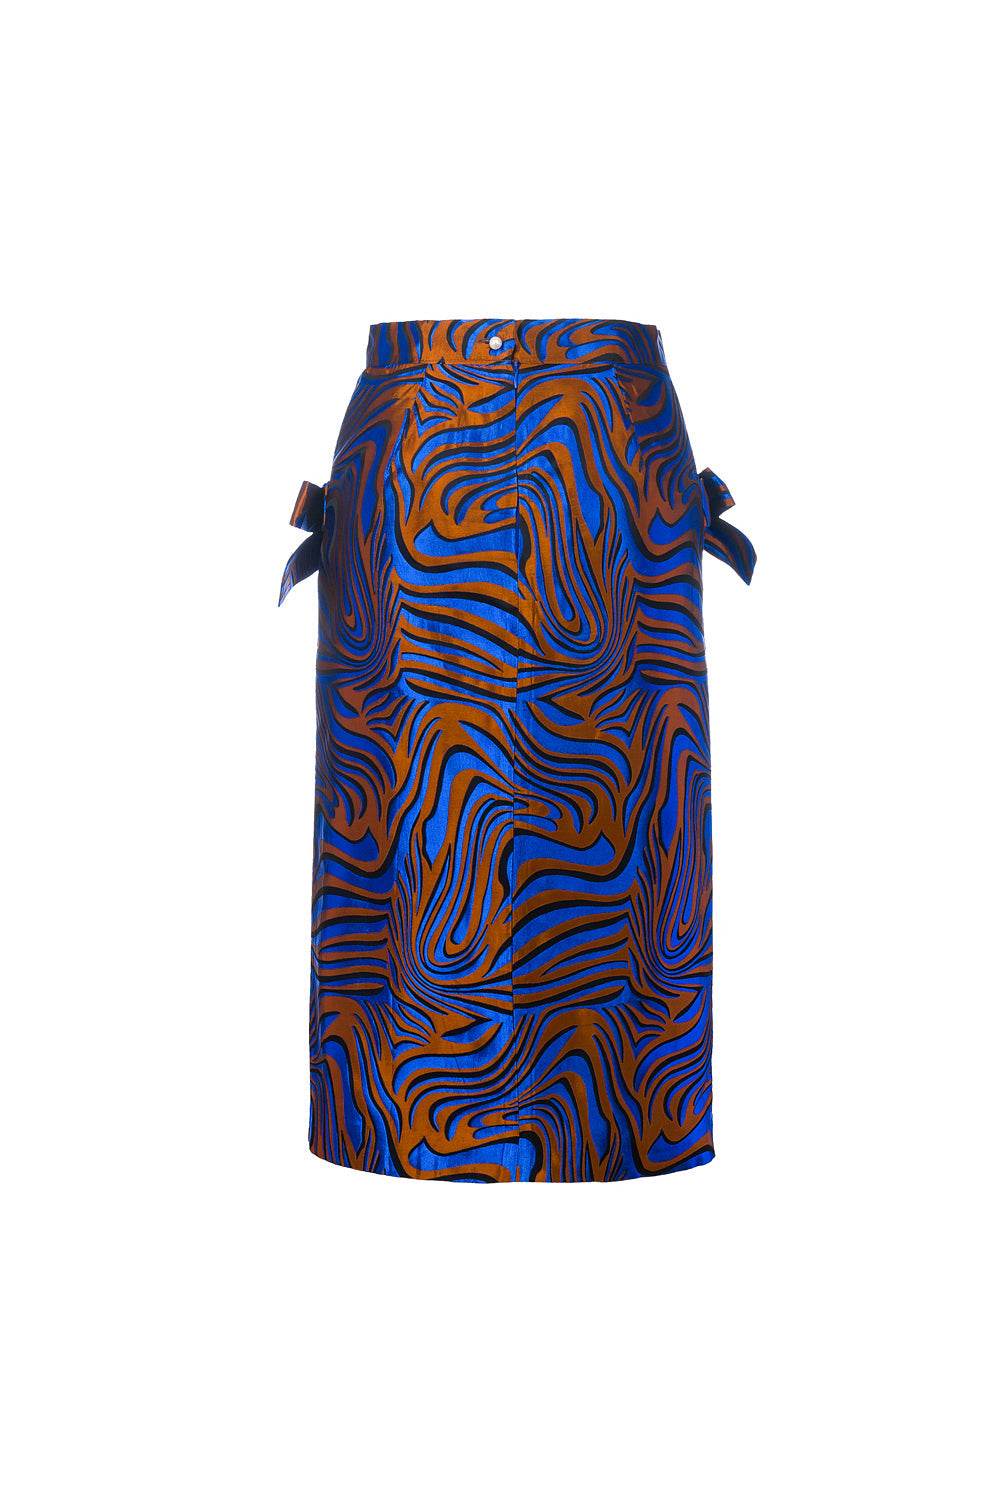 Blue Printed Skirt